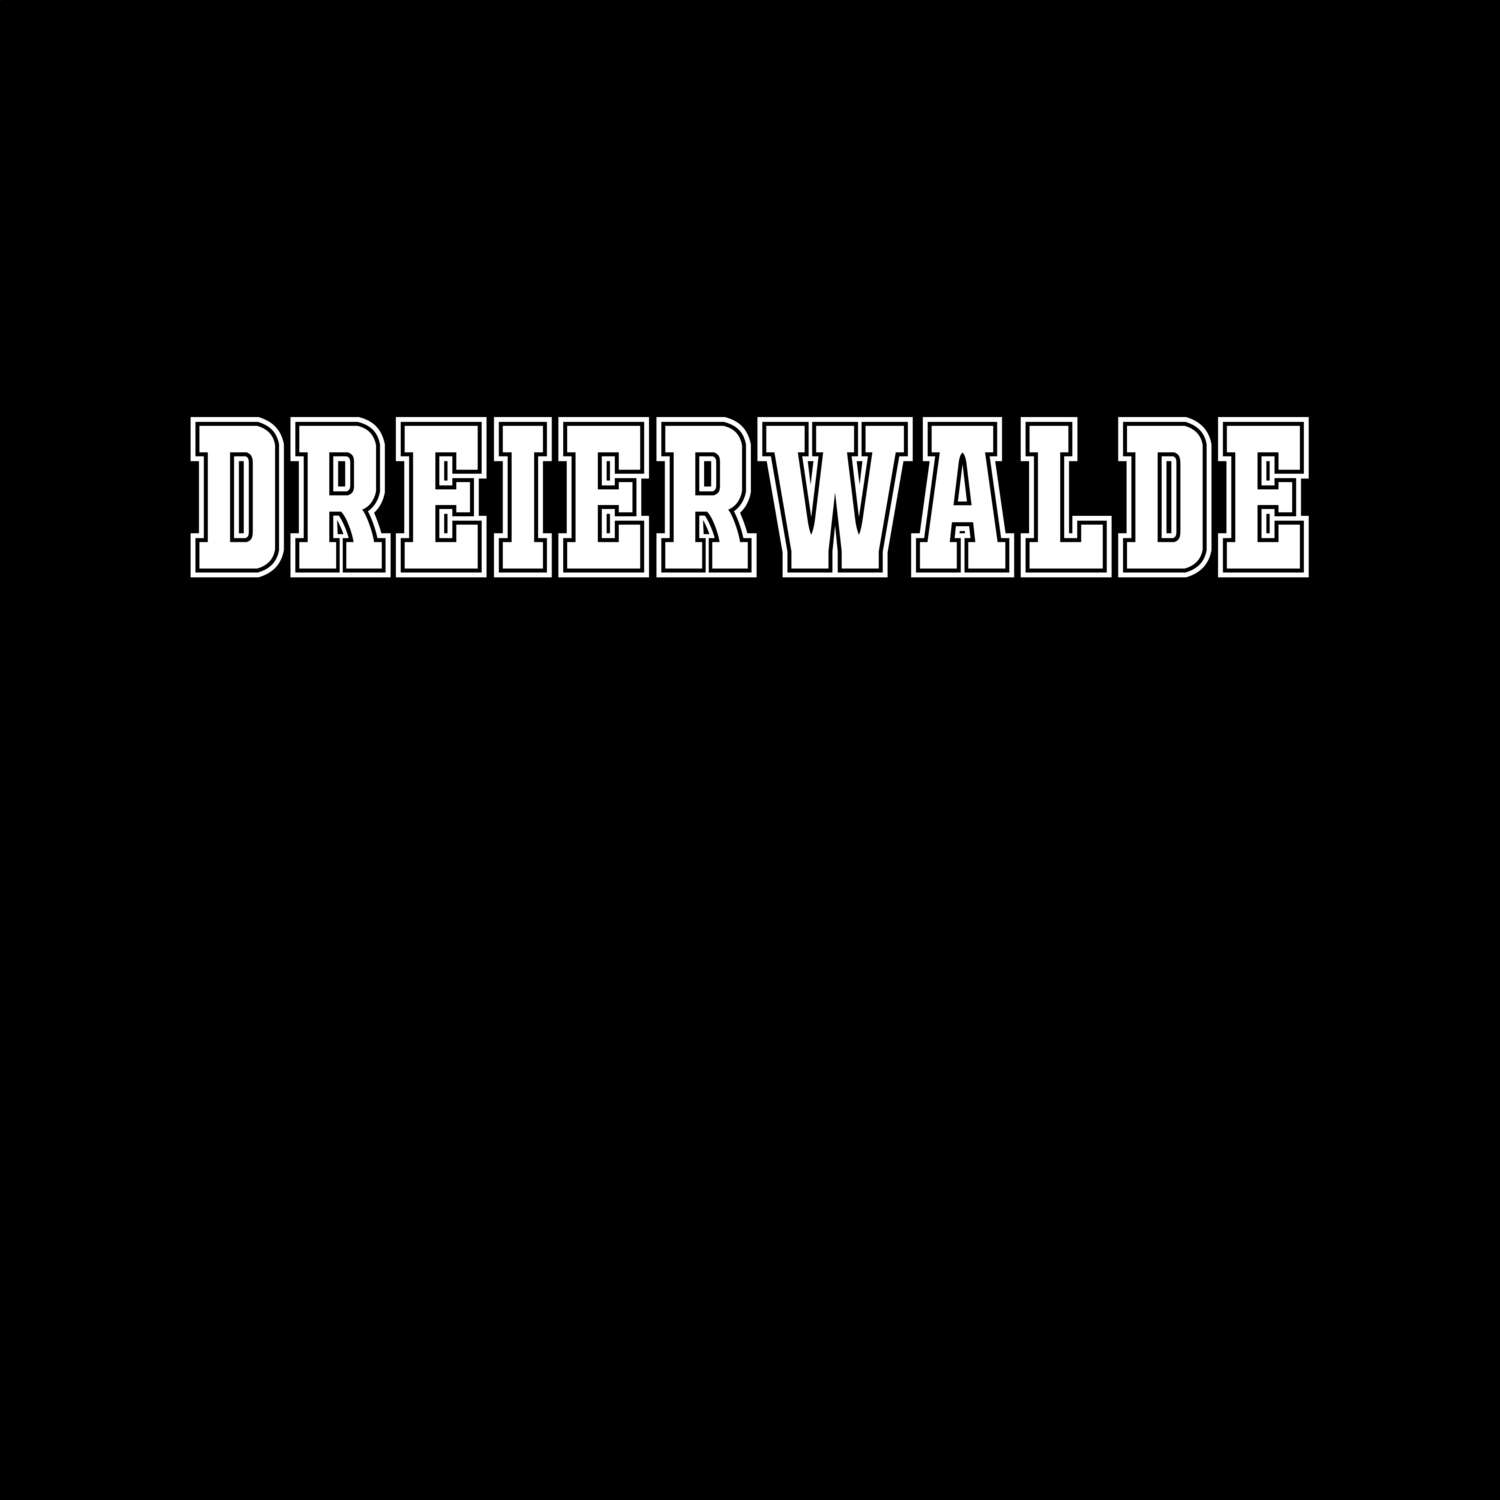 Dreierwalde T-Shirt »Classic«